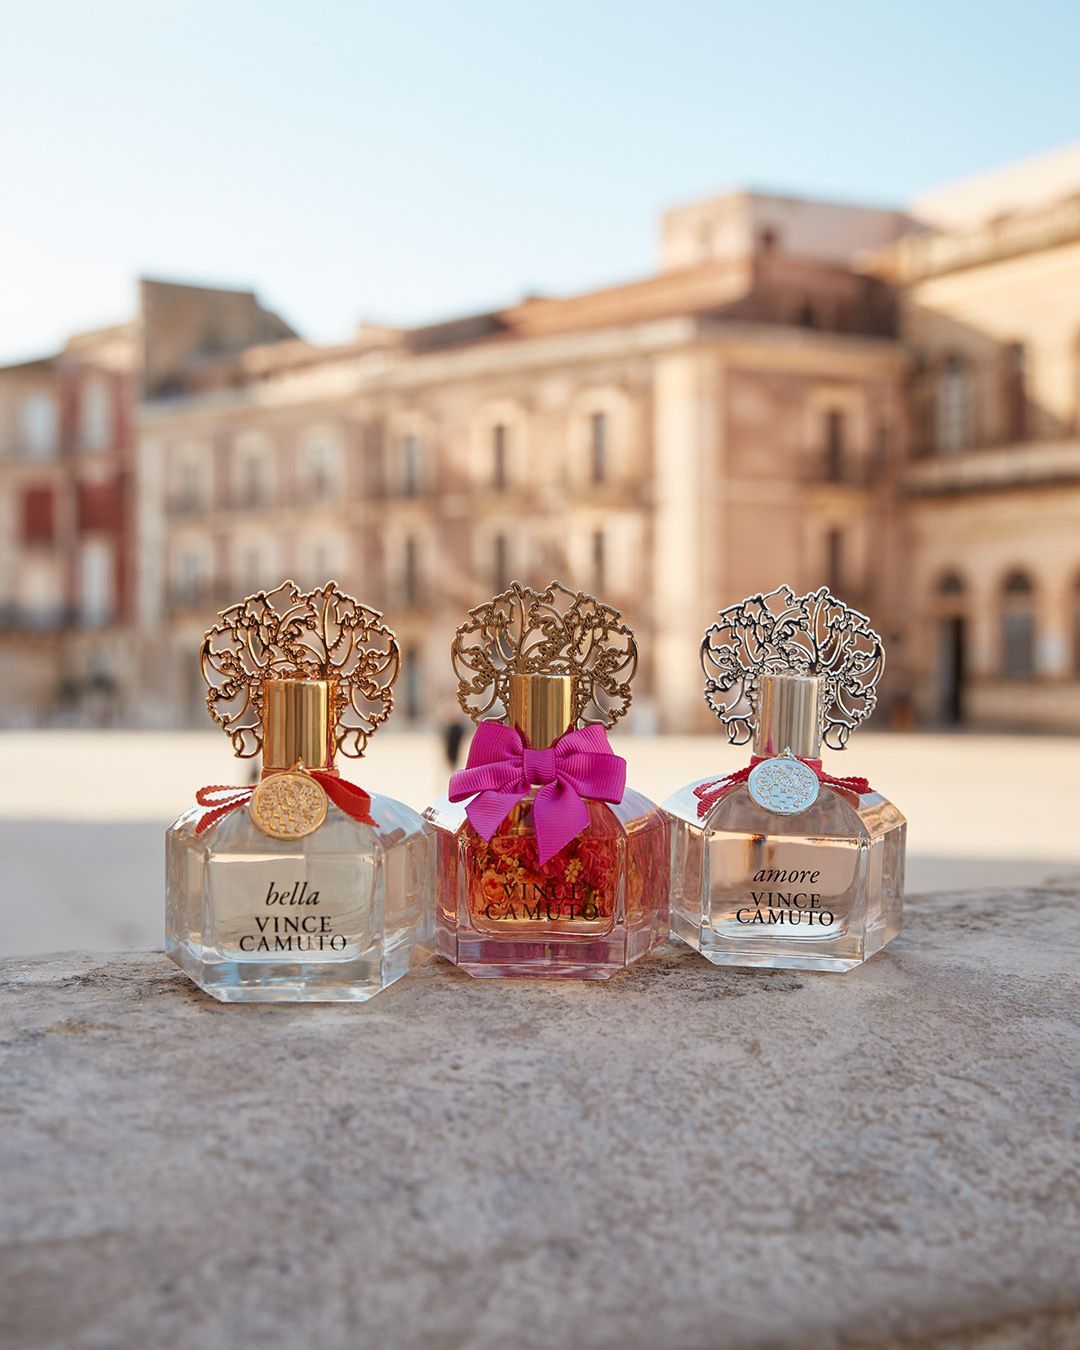 Buy VINCE CAMUTO Capri Eau De Perfume For Women